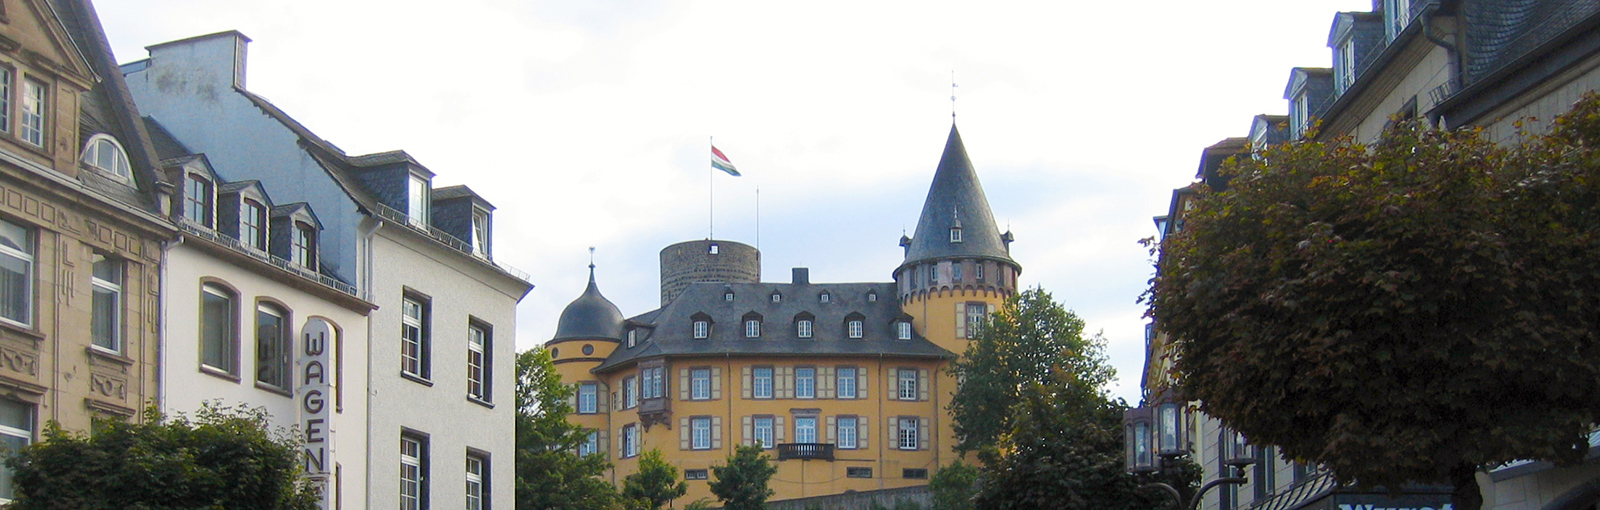 Bad Kreuznach Panorama